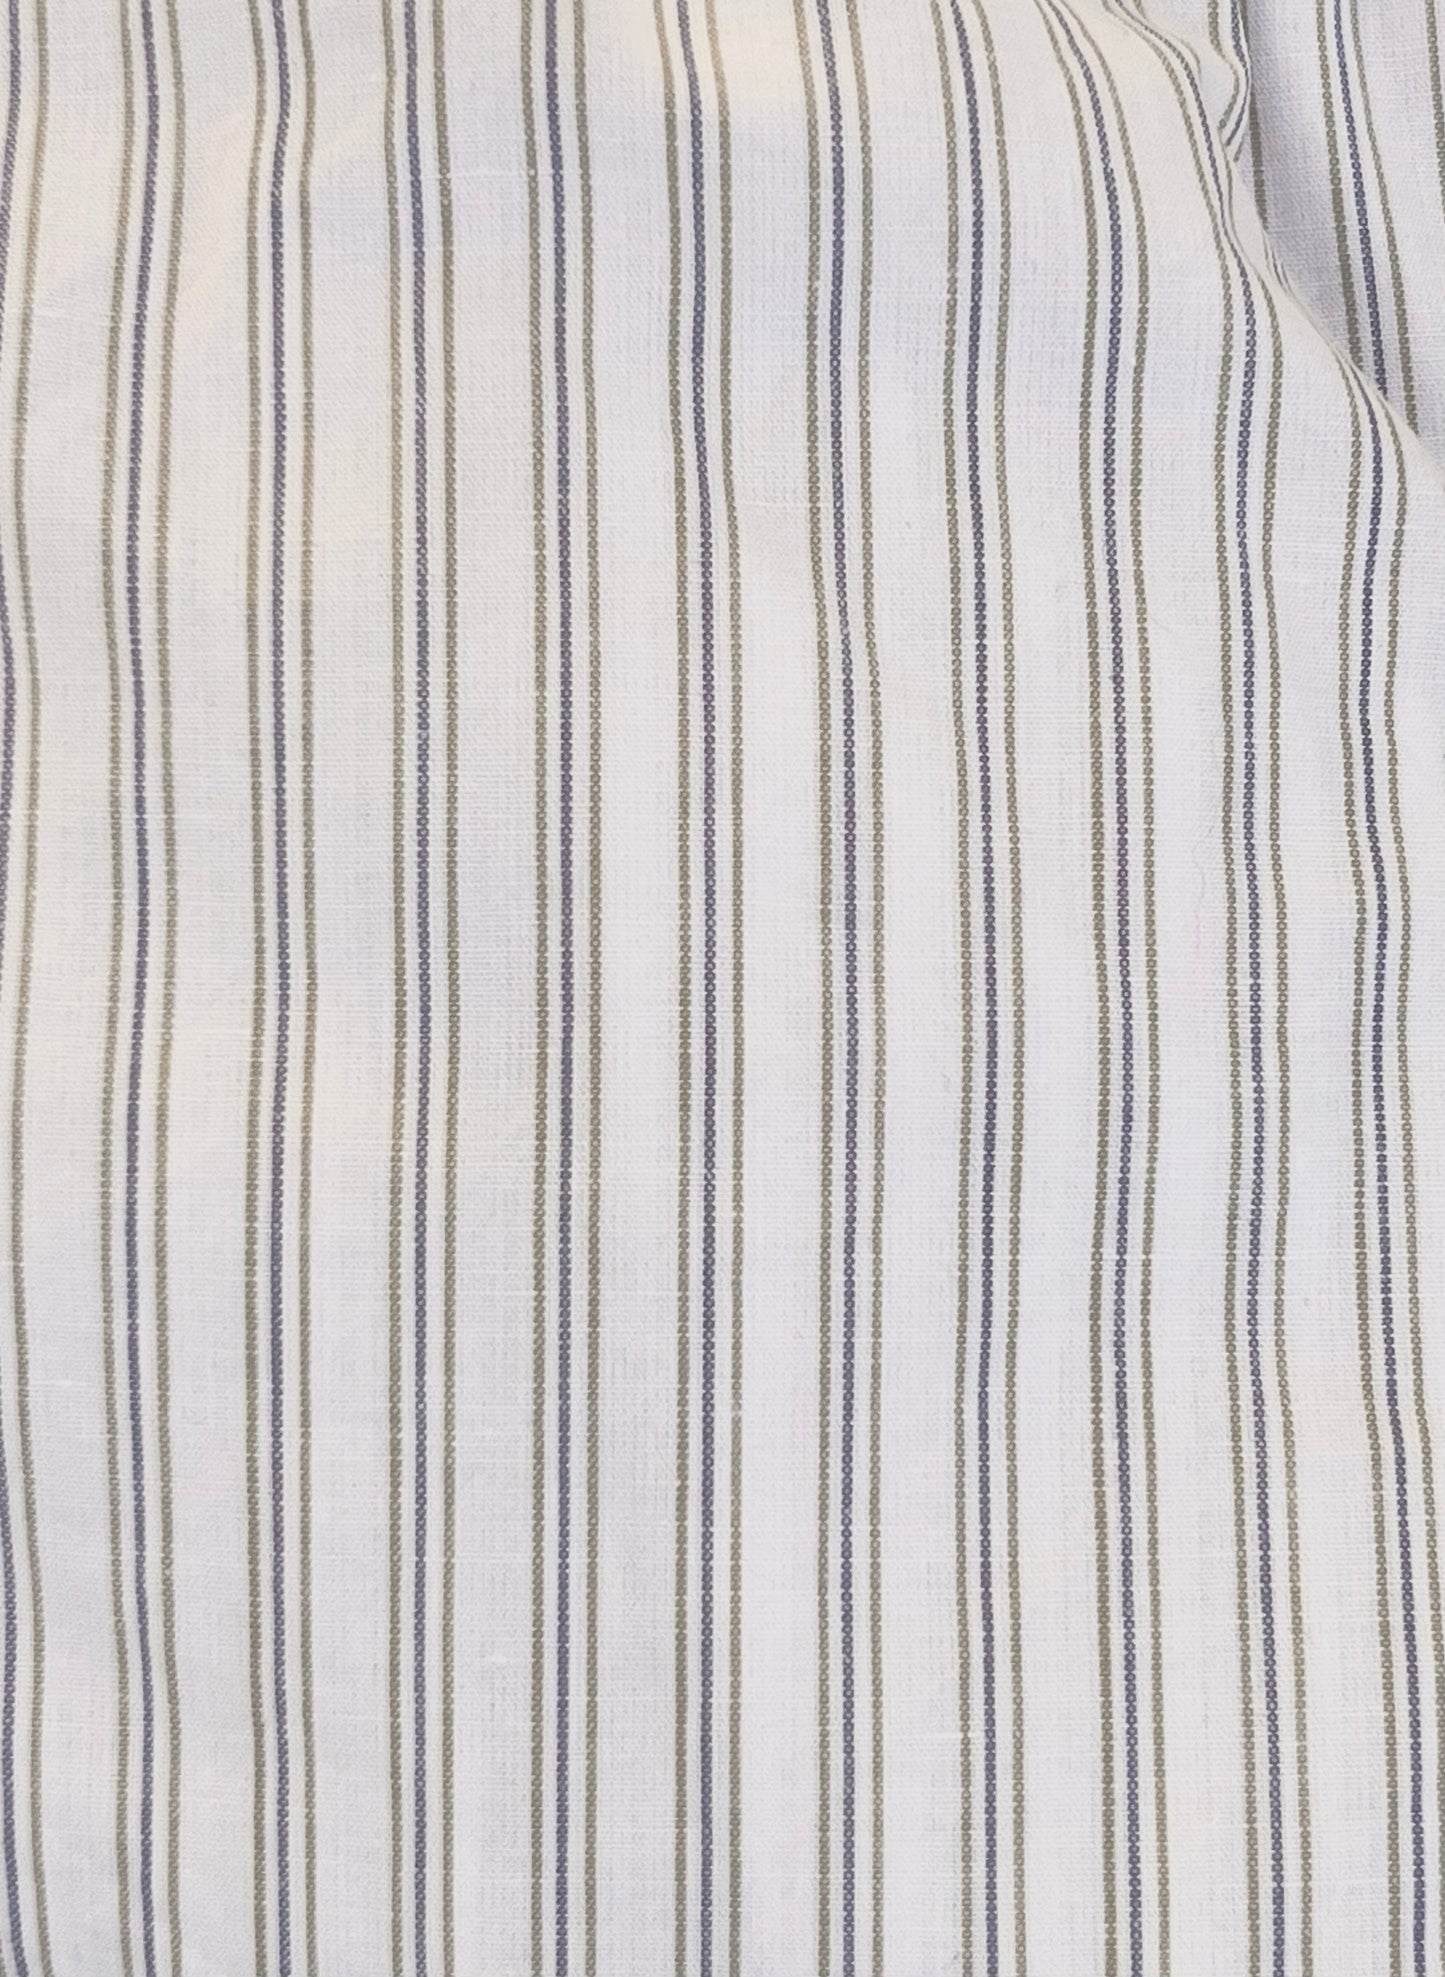 Strapless Cotton Top - Story Stripe